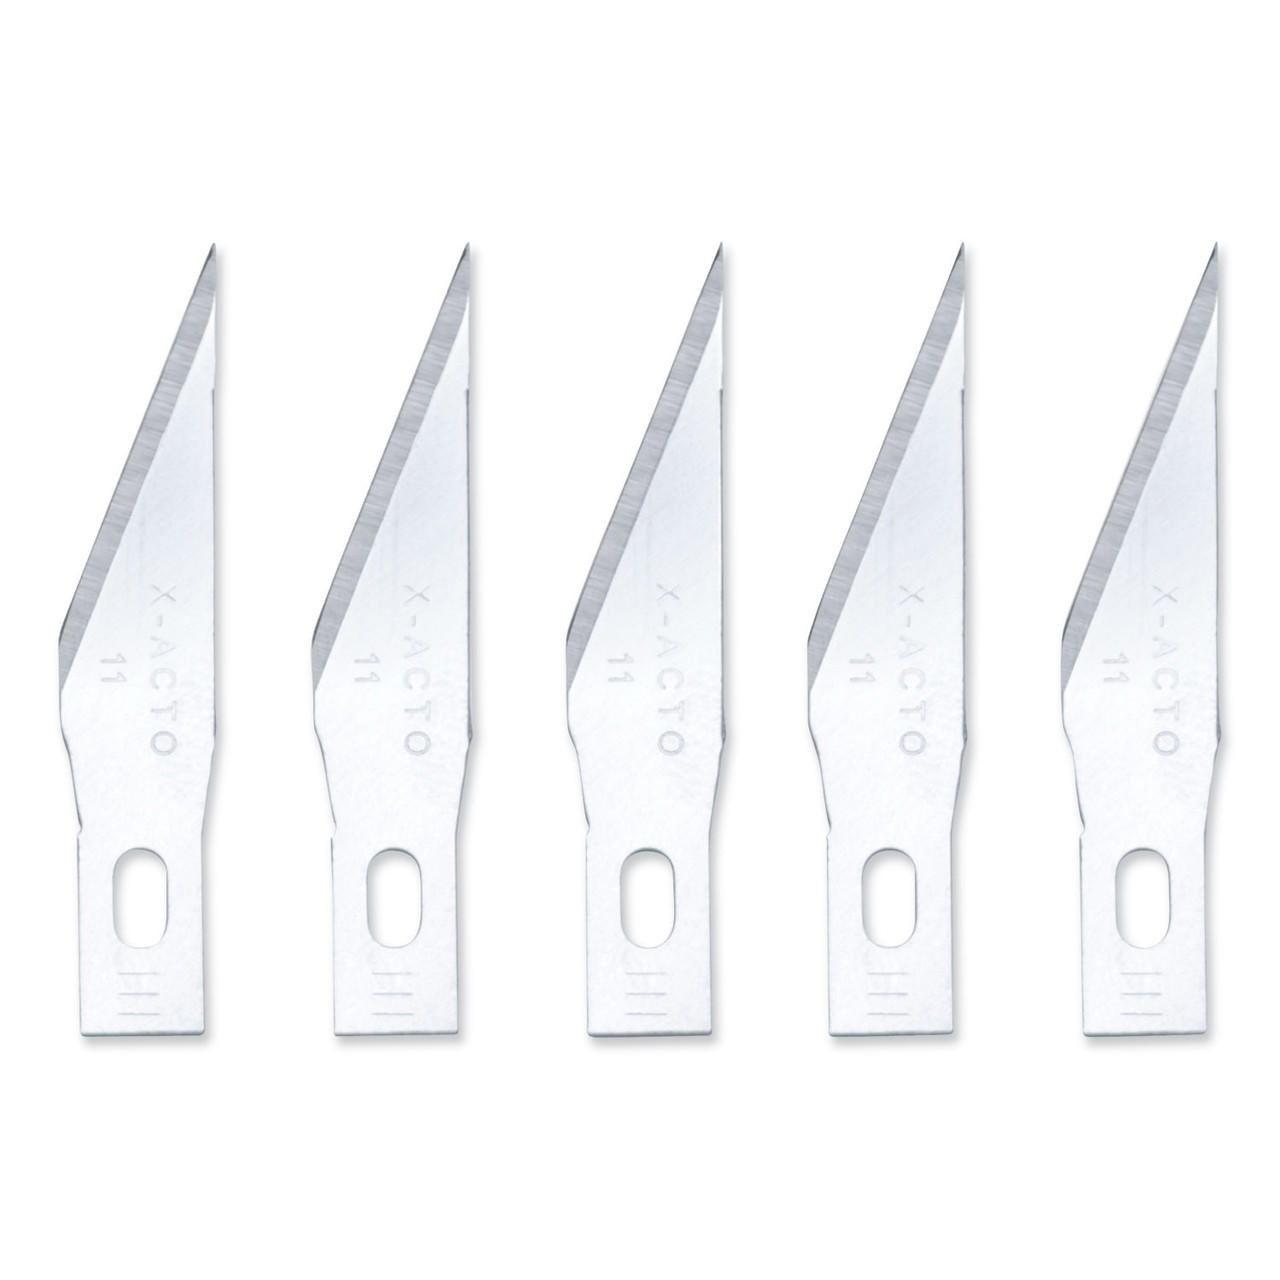 11 Xacto Blade, Precision Knives and Blades